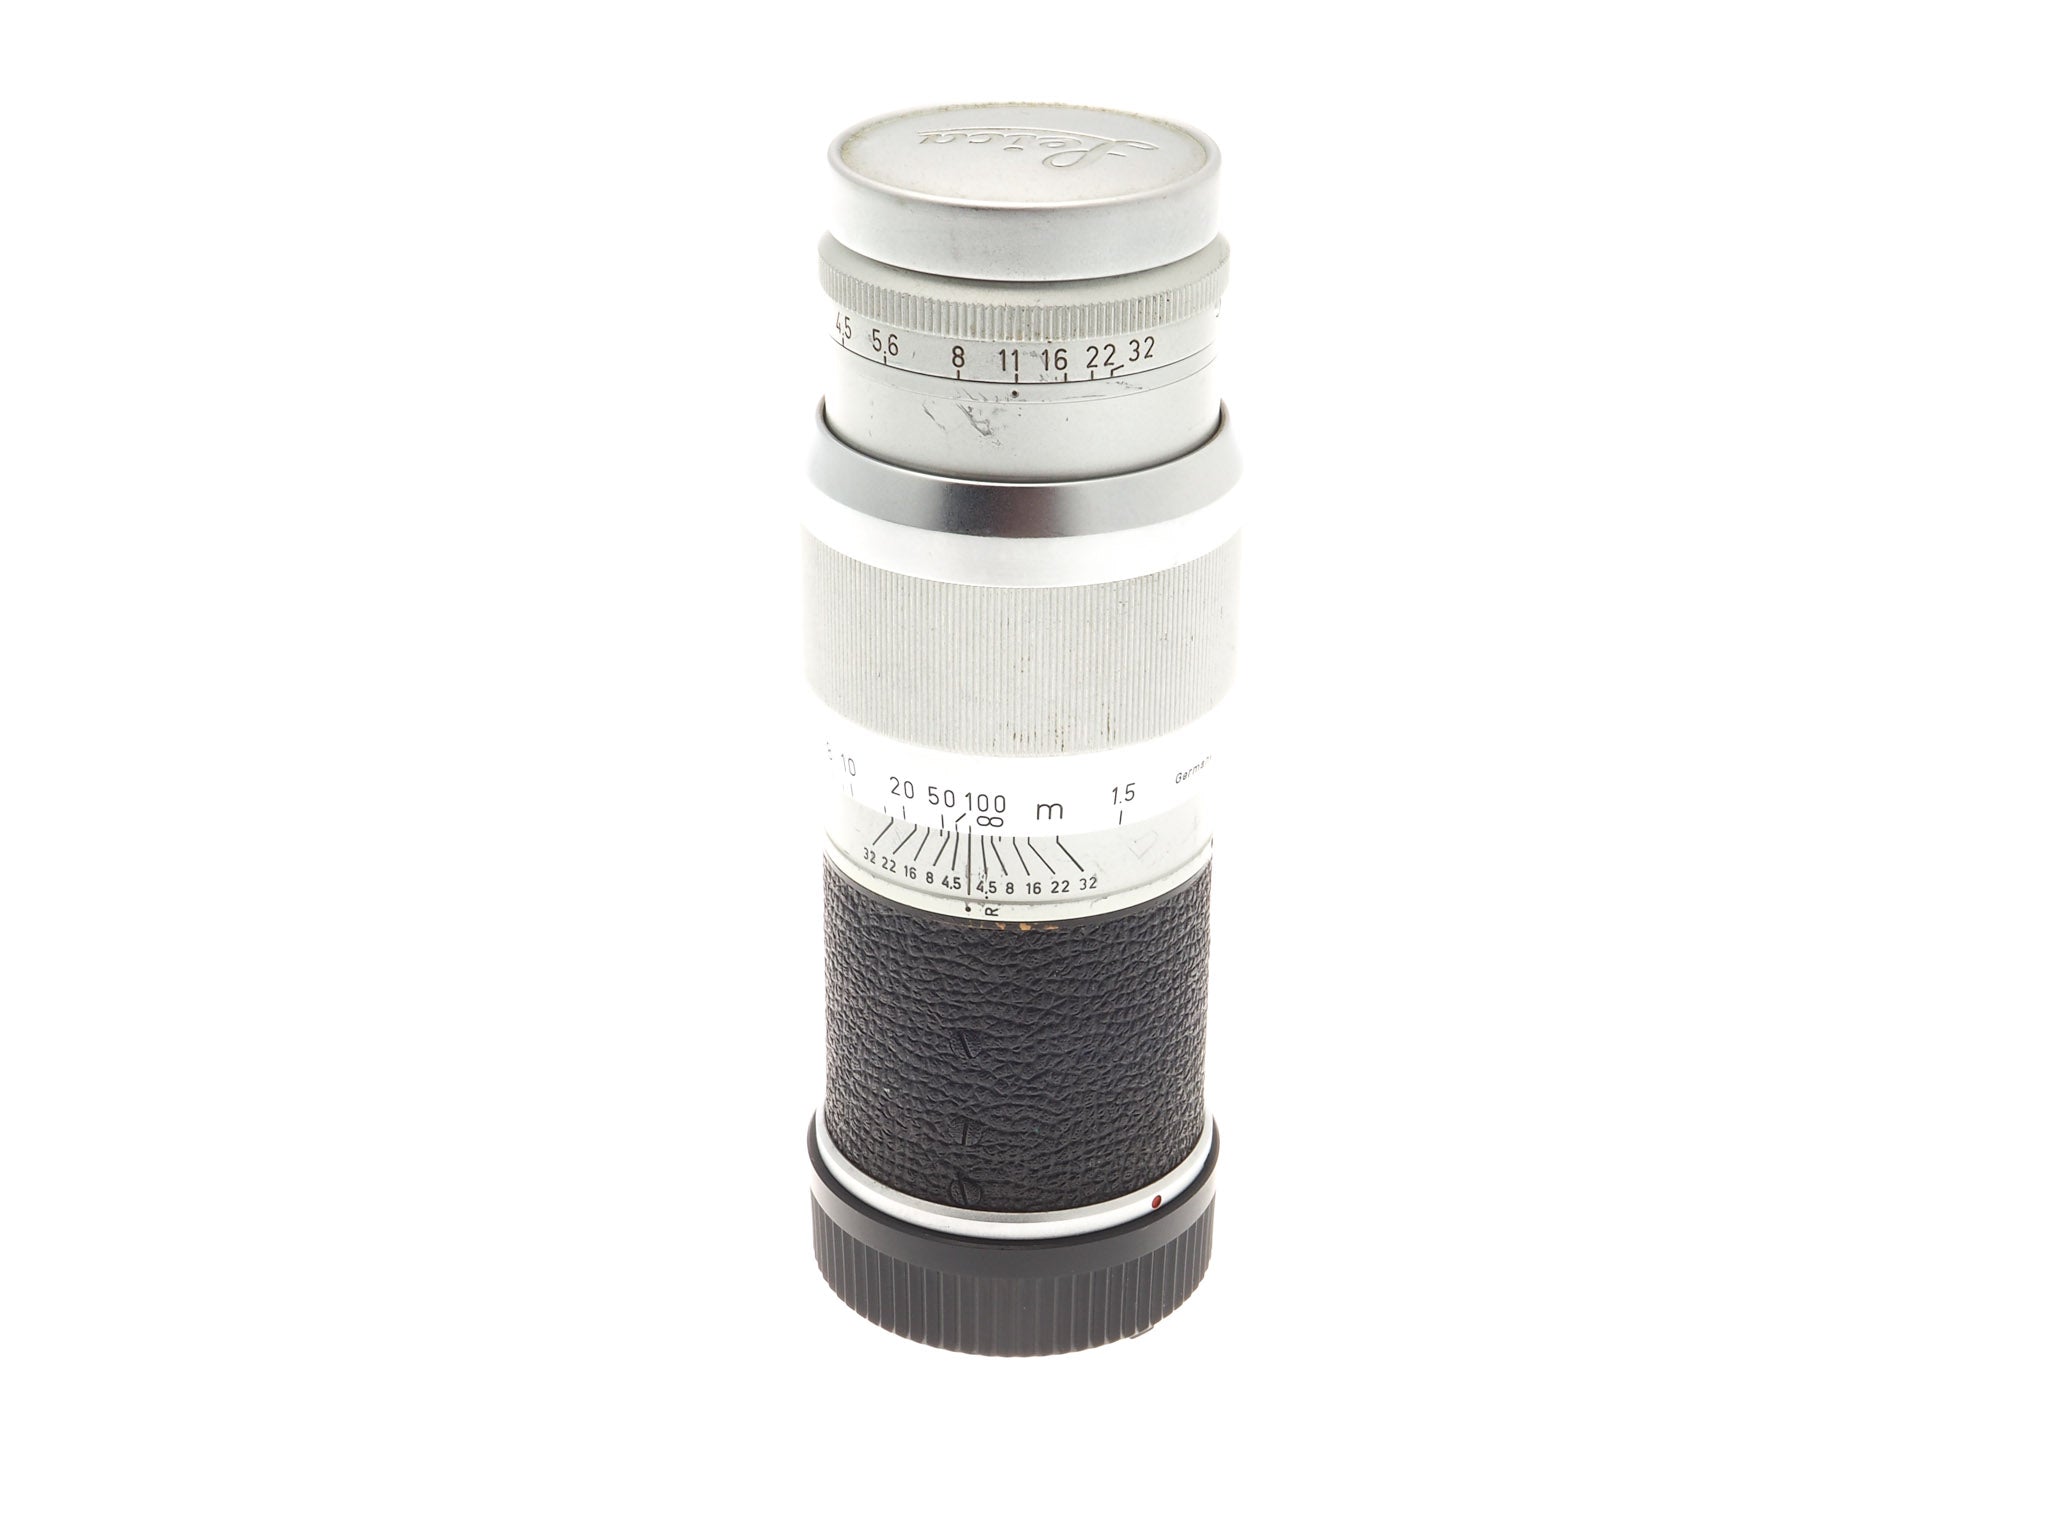 Leica Hektor 13.5cm 135mm f4.5 L39-